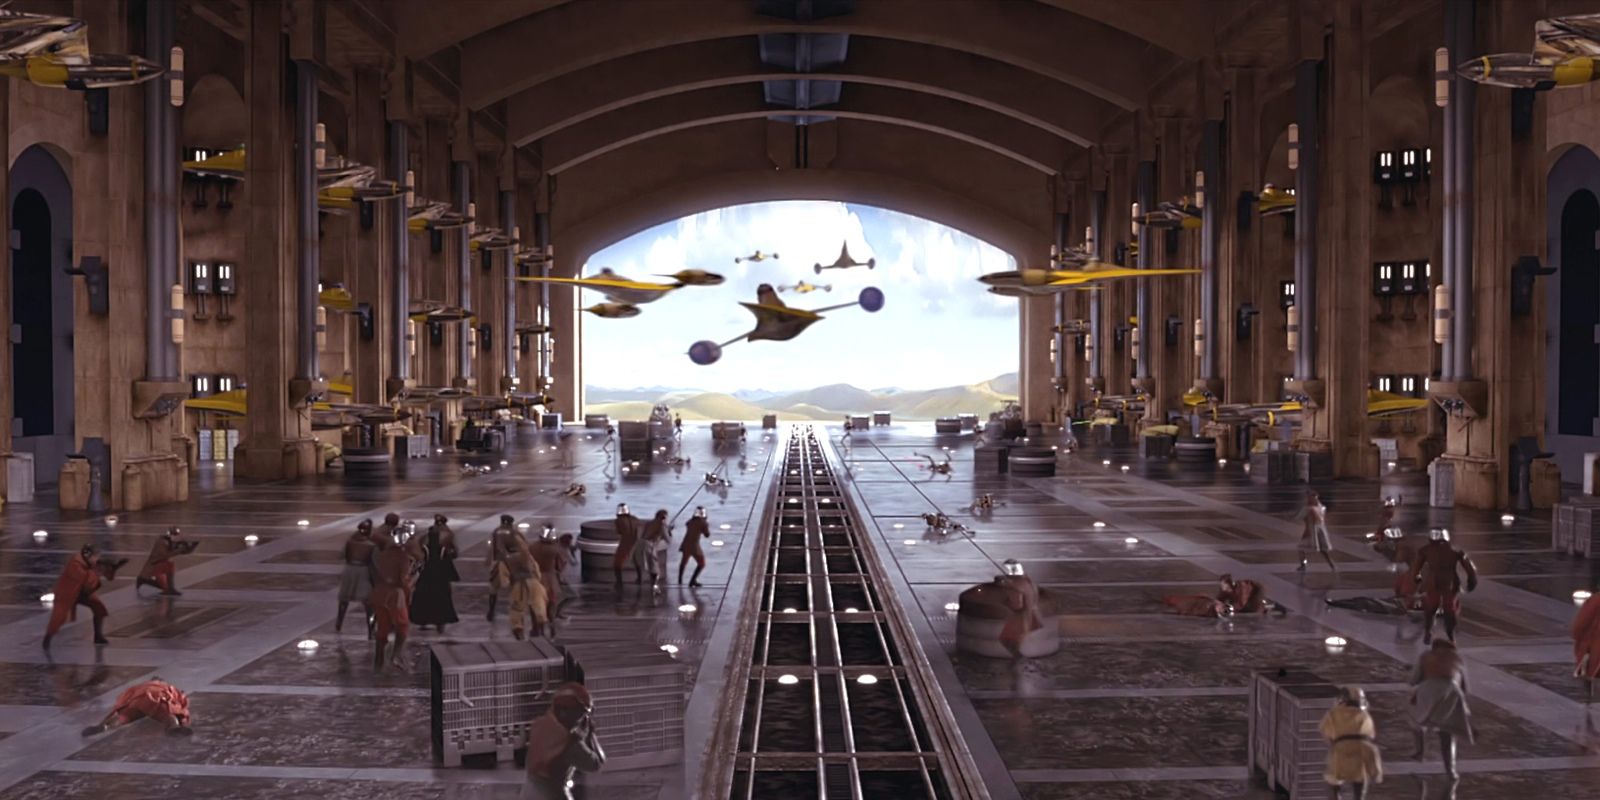 N-1 Starfighters decolam do hangar Theed durante a Batalha de Naboo em Star Wars: A Ameaça Fantasma.